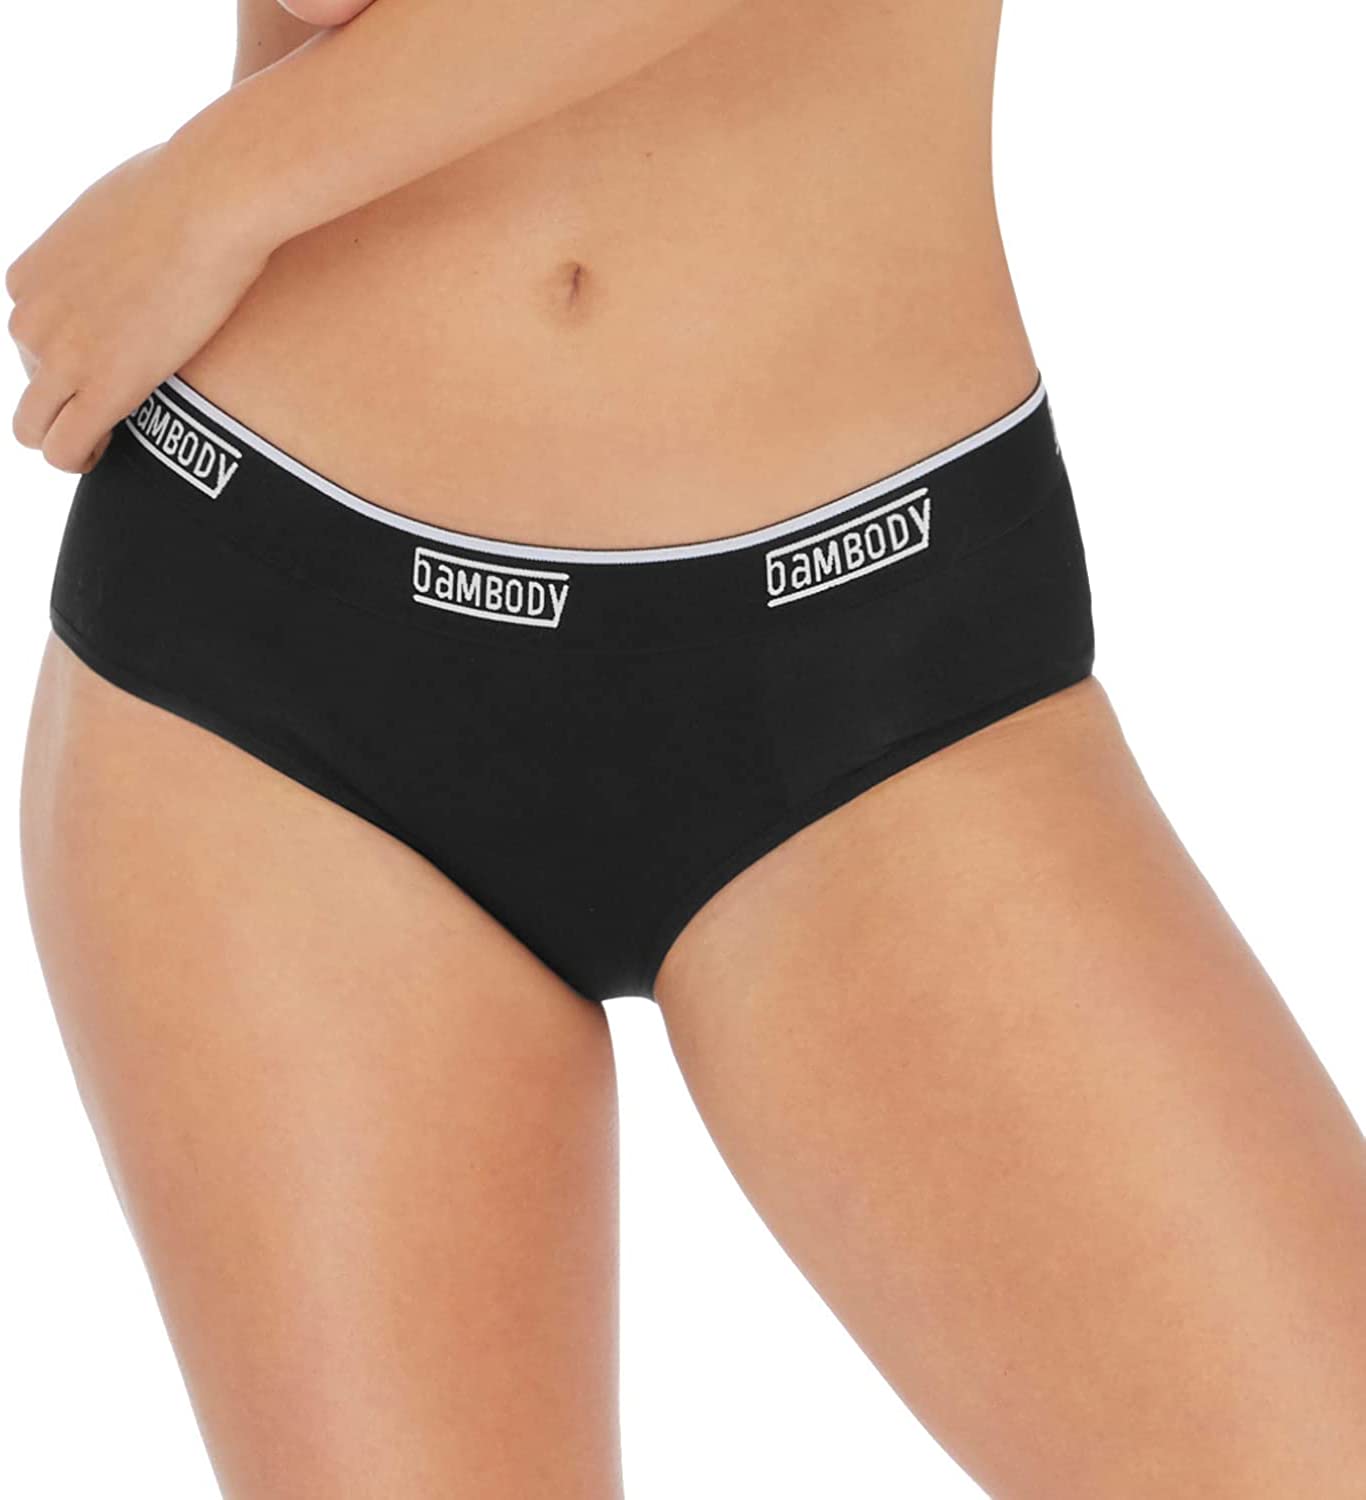 Women & Girls Period Panty Hipster Leak Proof Underwear for Medium